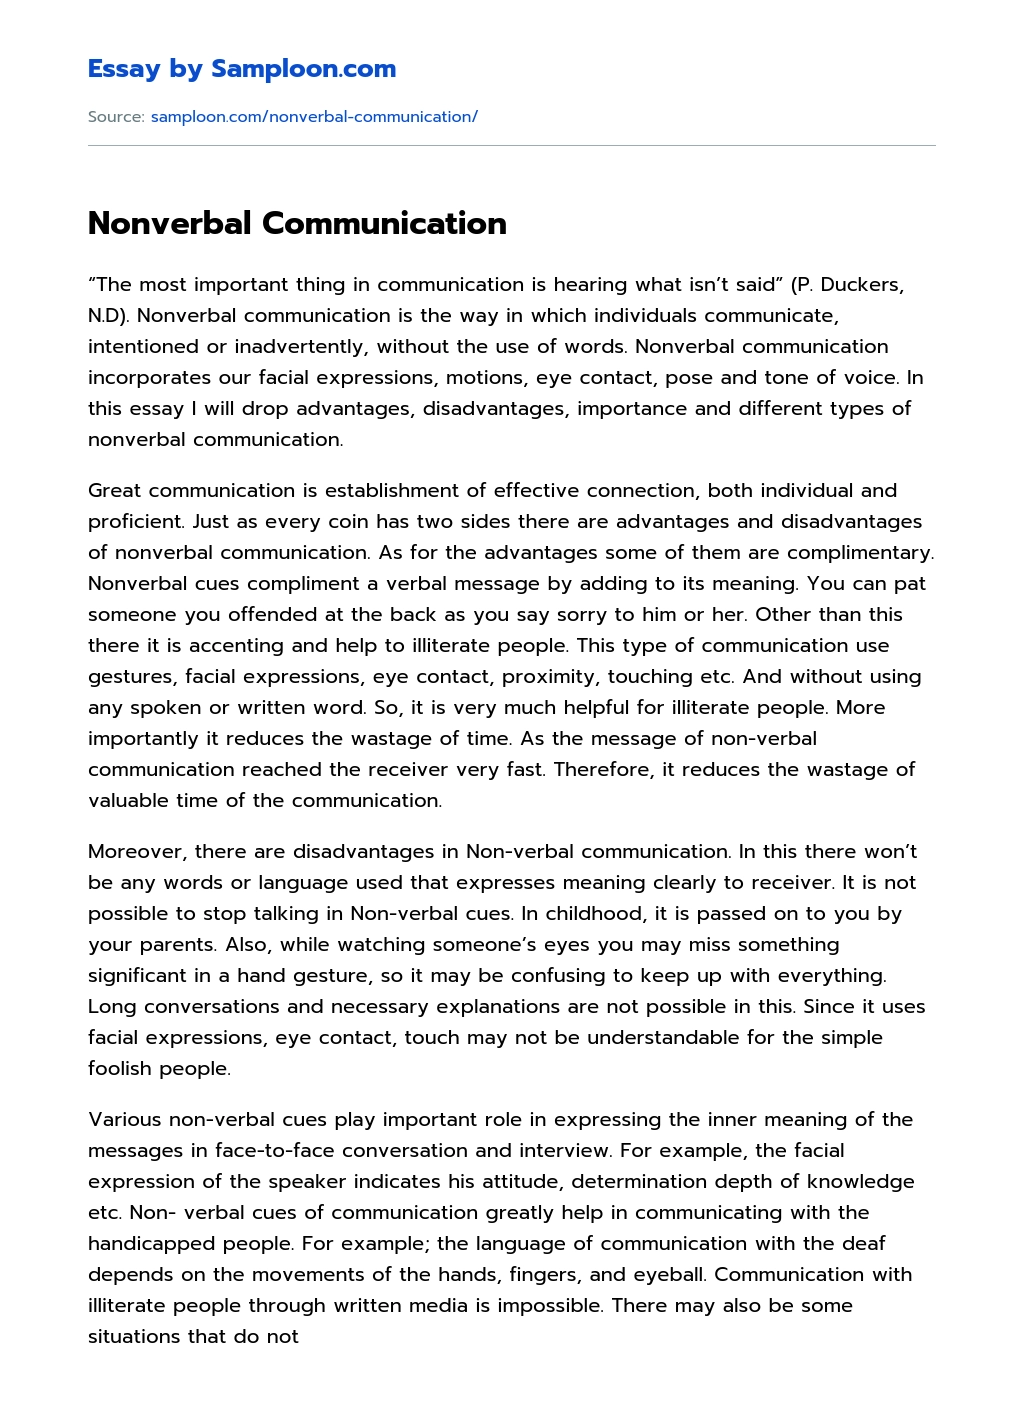 Nonverbal Communication essay